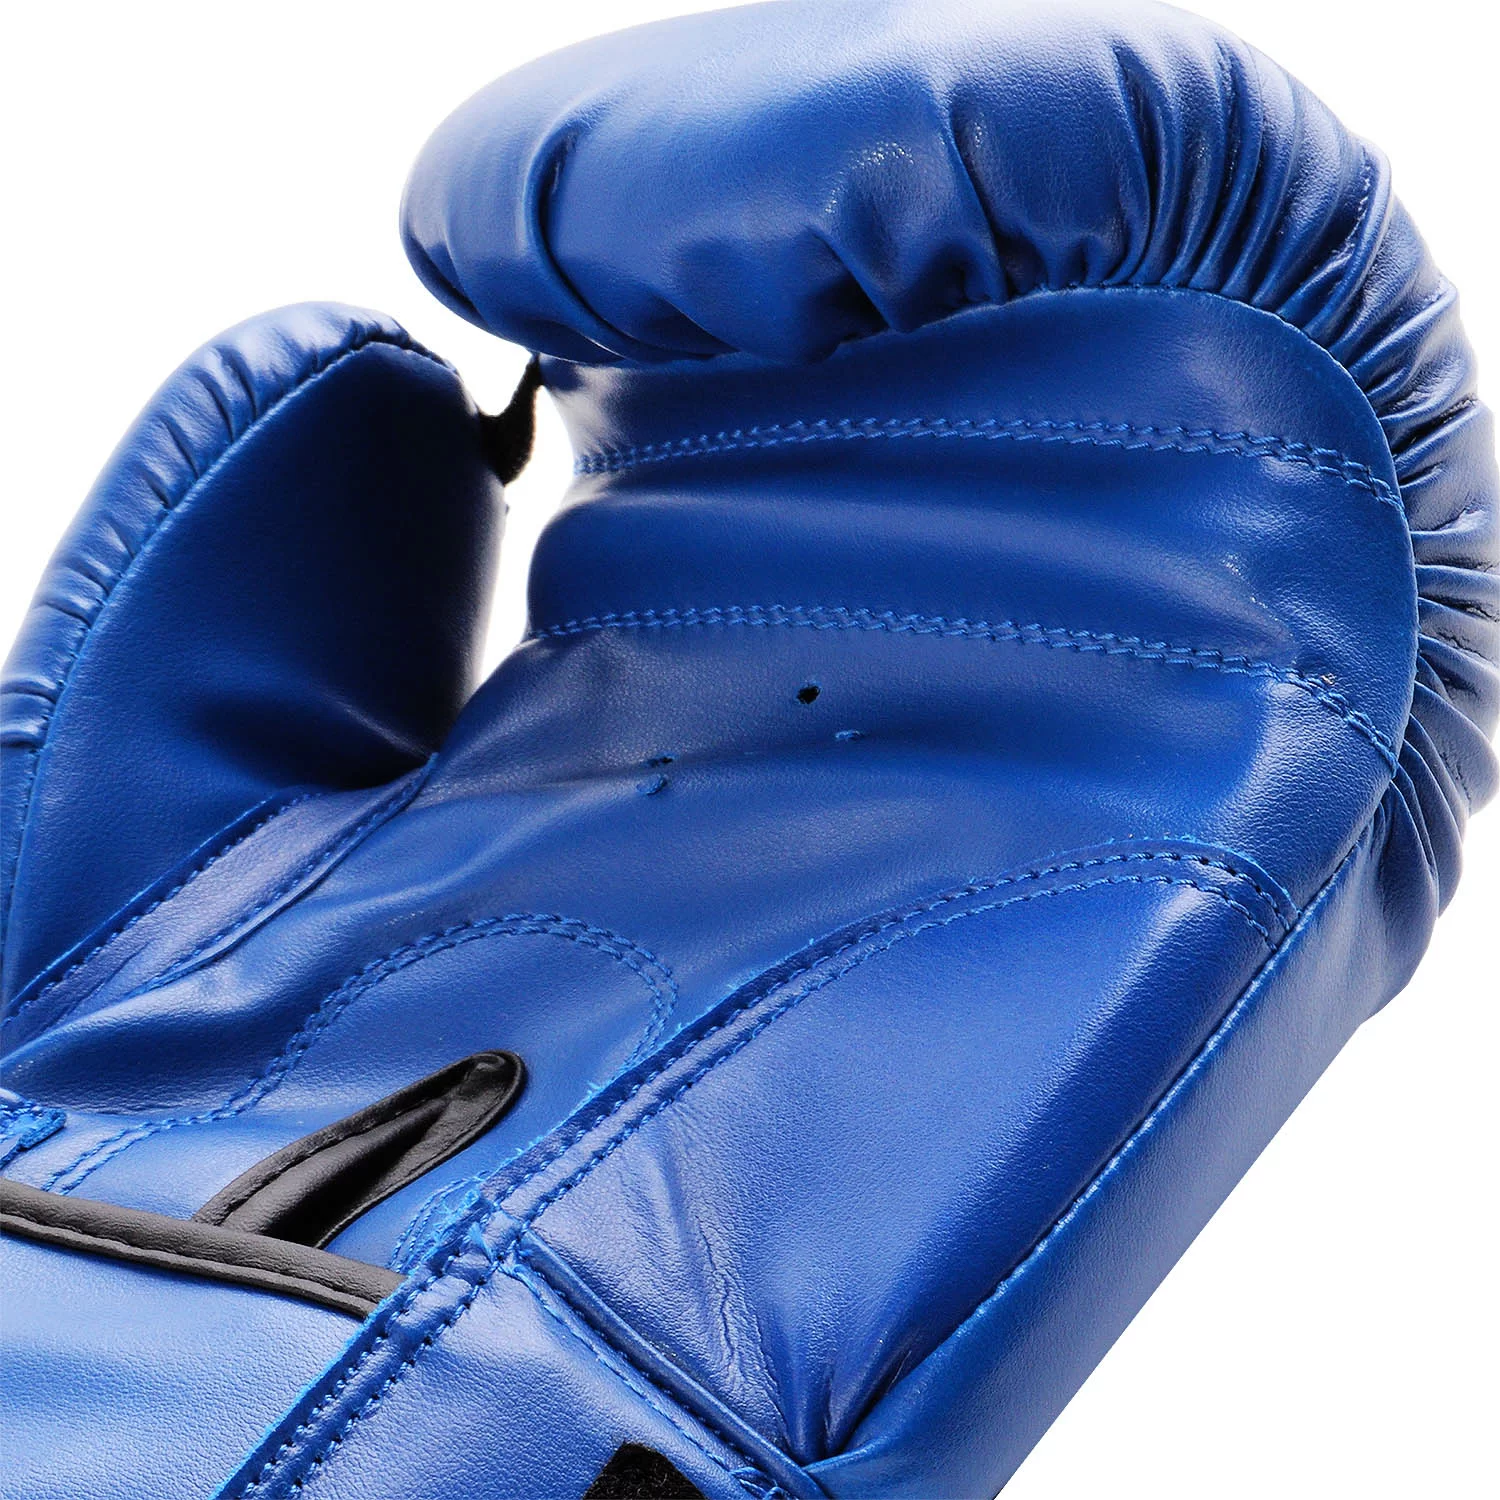 Фото Перчатки боксерские Uppercot UBG-01 DX синий со склада магазина СпортСЕ